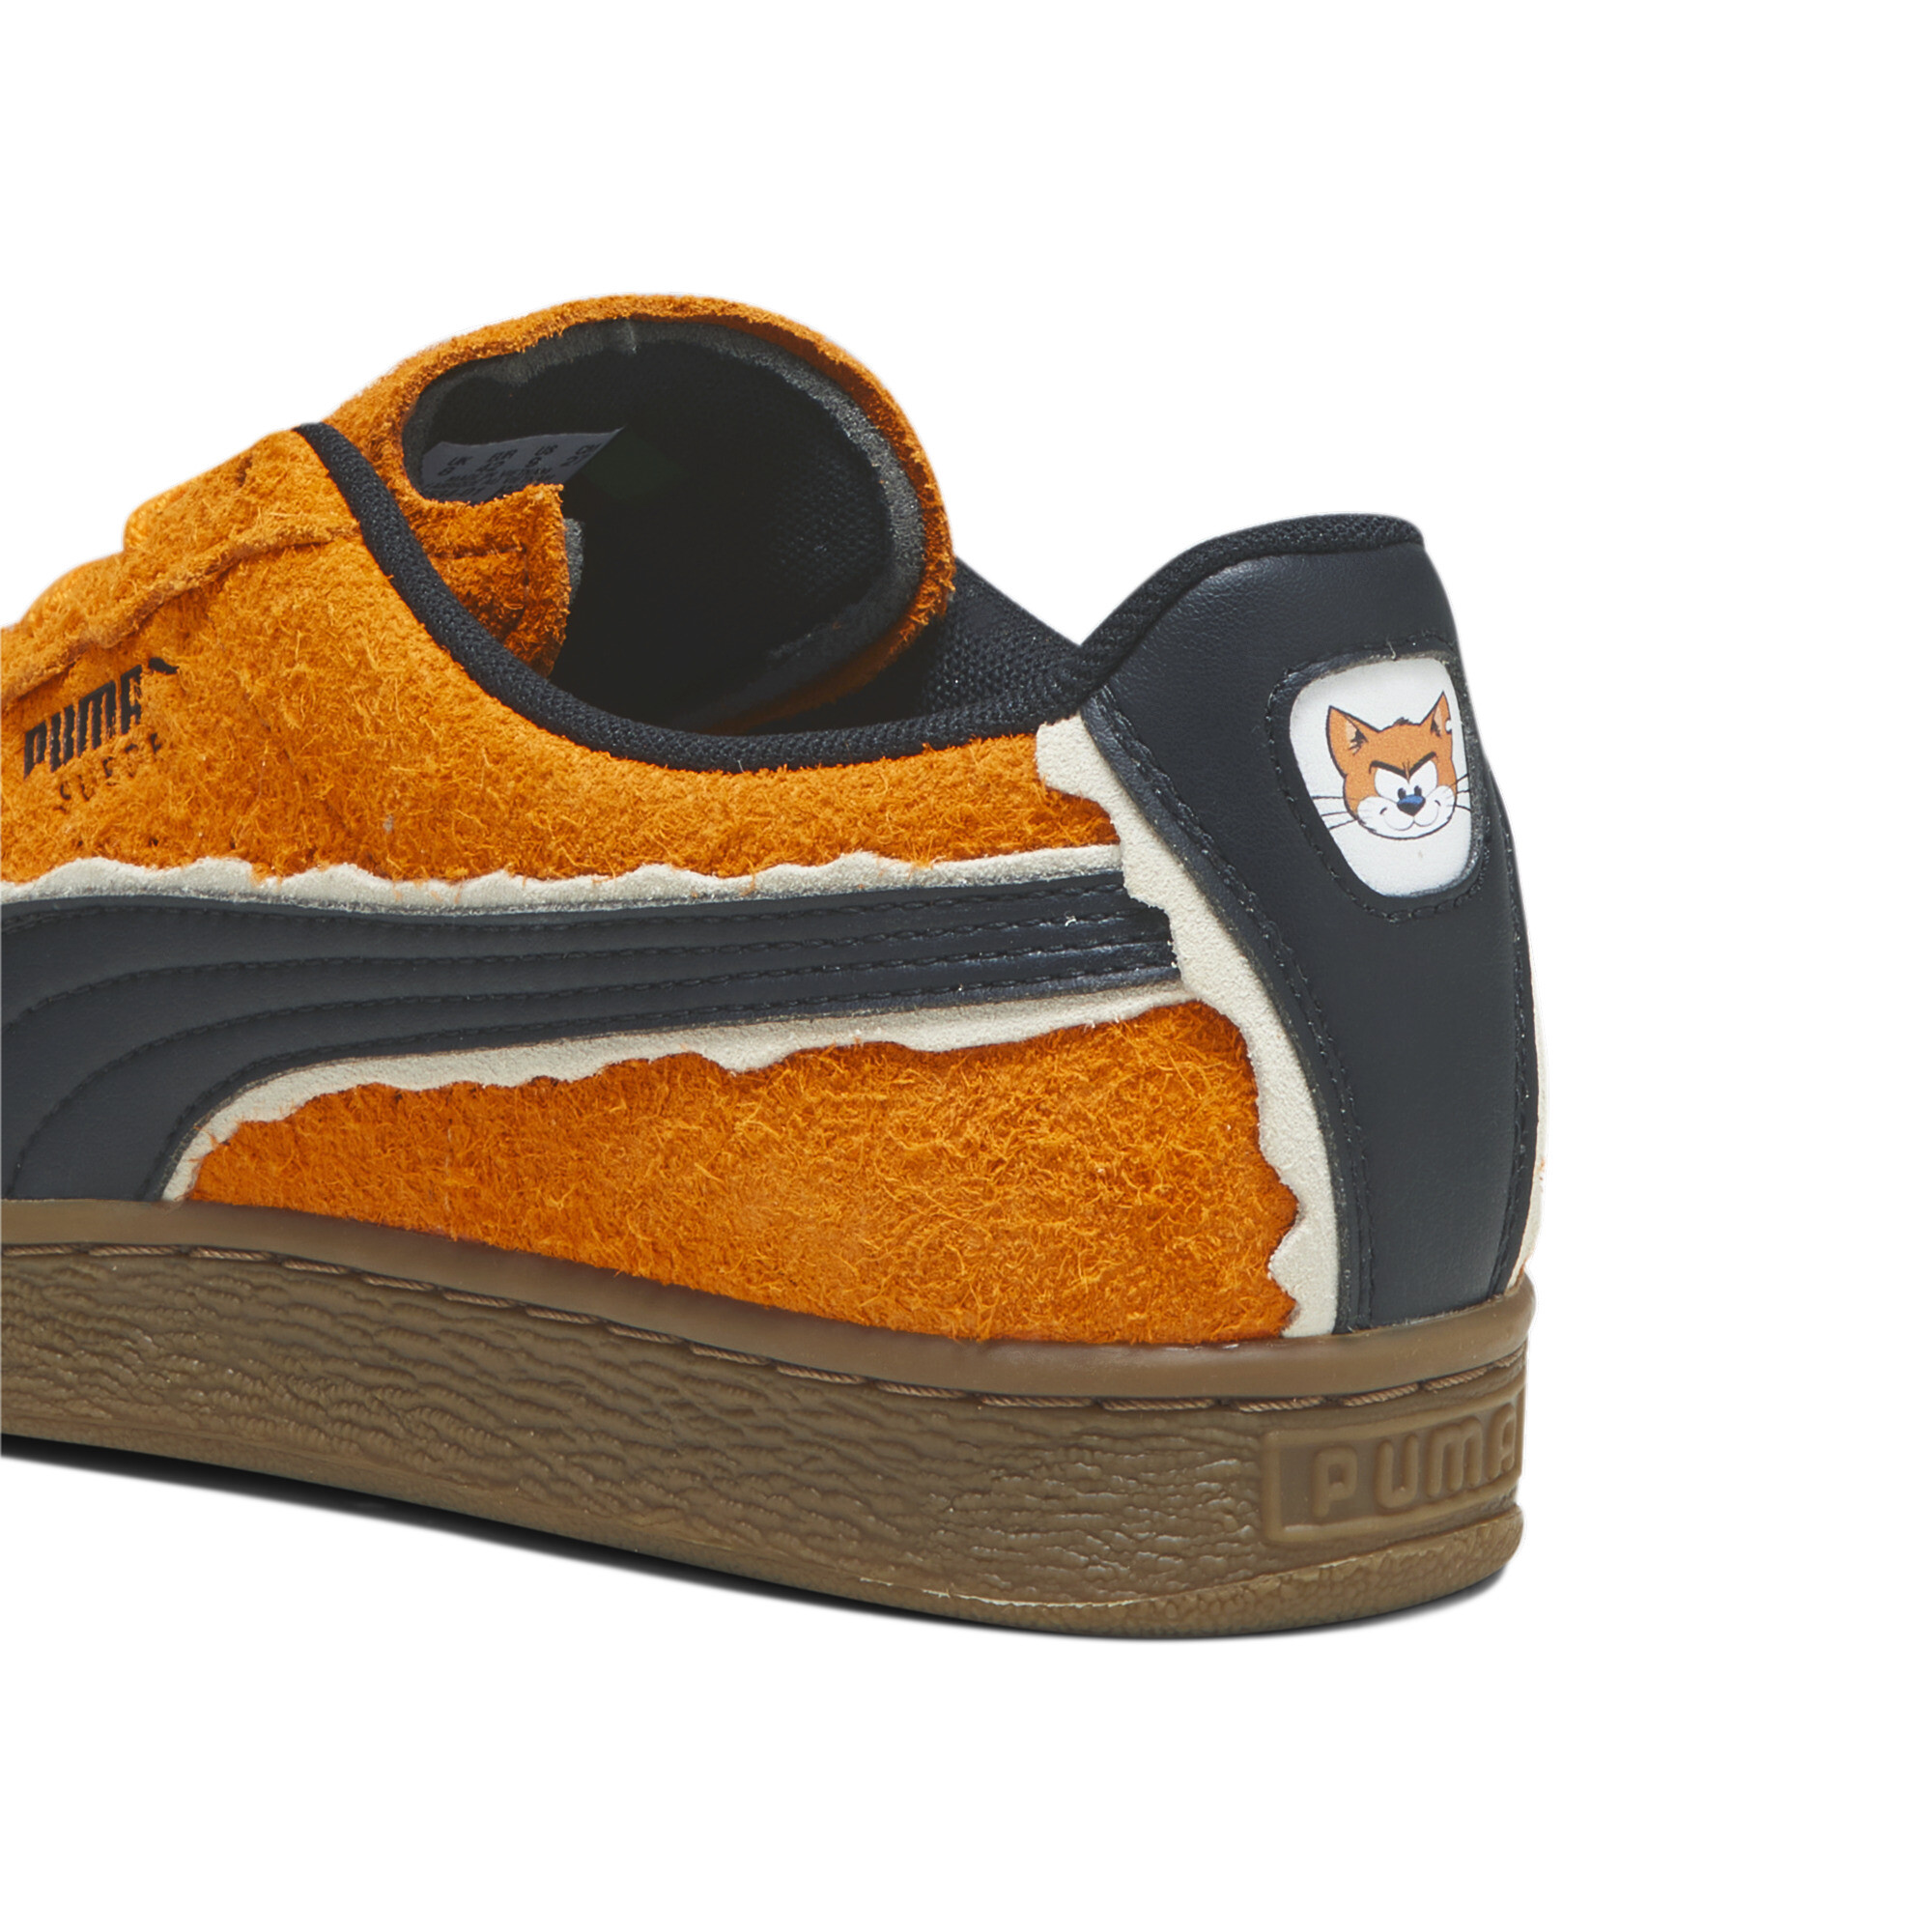 Men's PUMA X THE SMURFS Suede Sneakers In Orange, Size EU 42.5